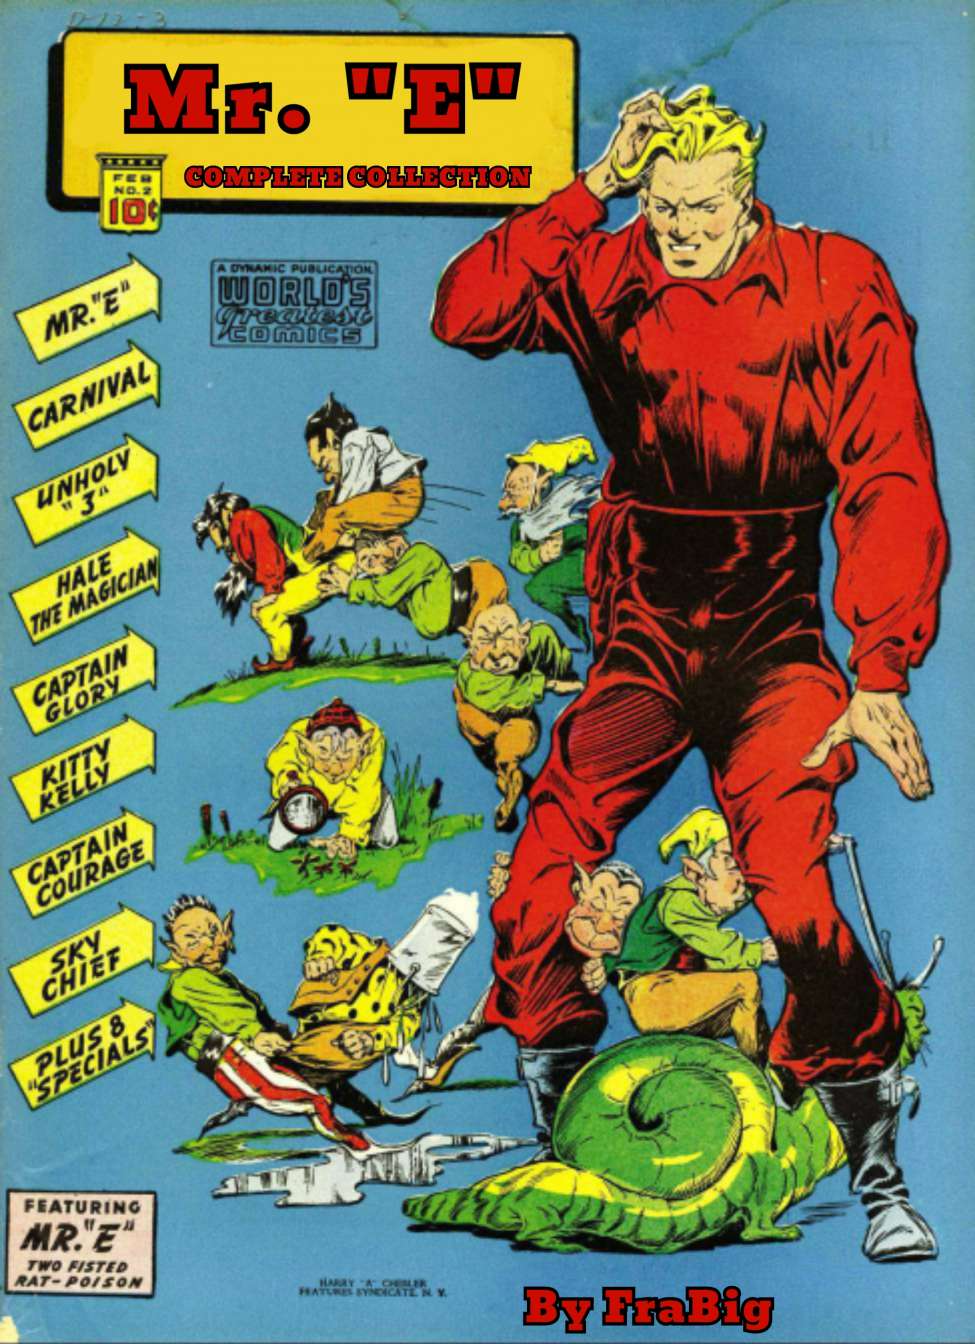 Comic Book Cover For Mr. "E" Complete Collection